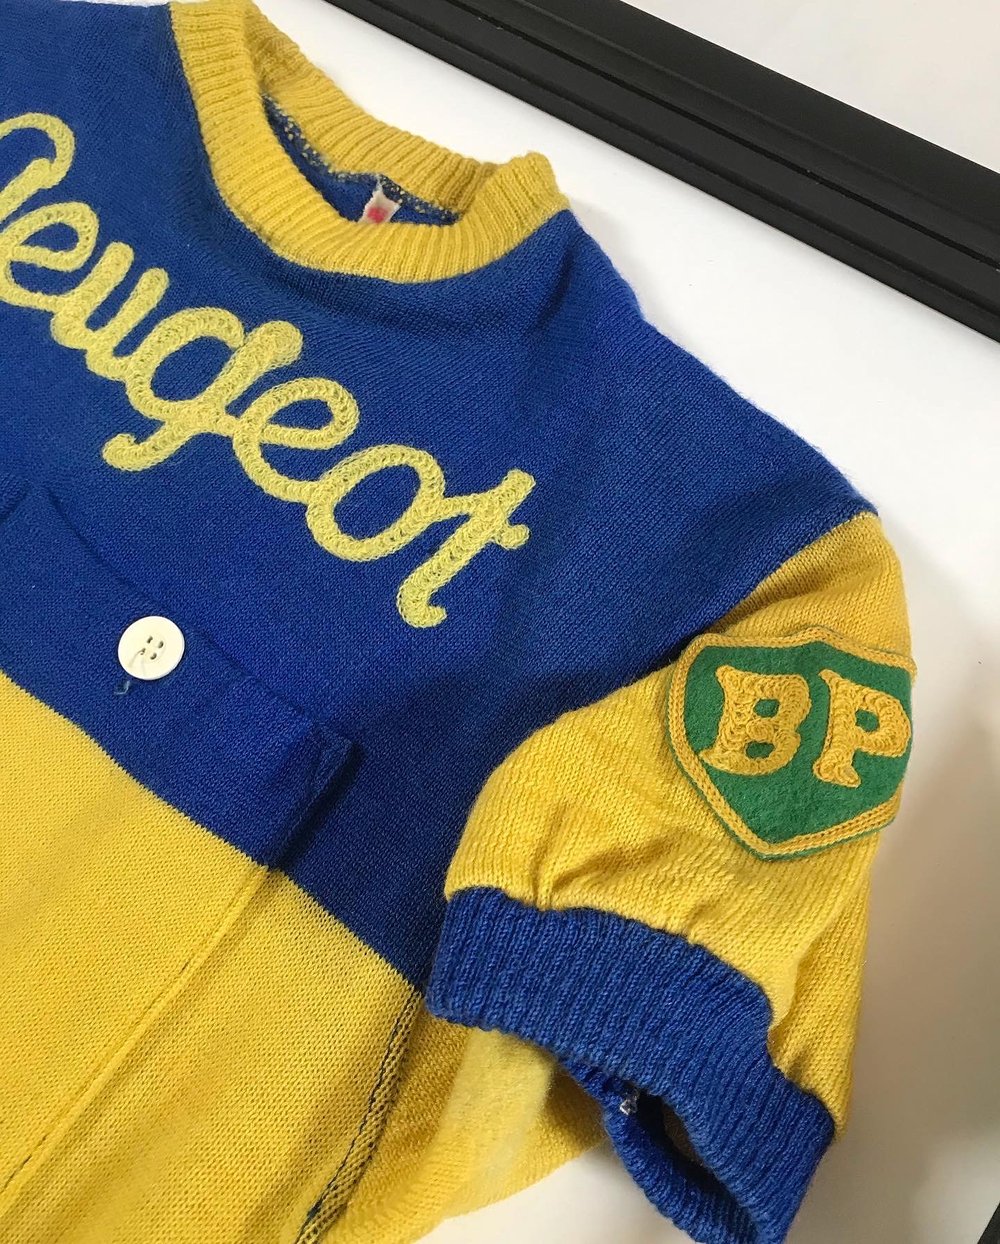 1959 ðŸ‡«ðŸ‡· Peugeot BP Dunlop -  Original used pro team jersey 